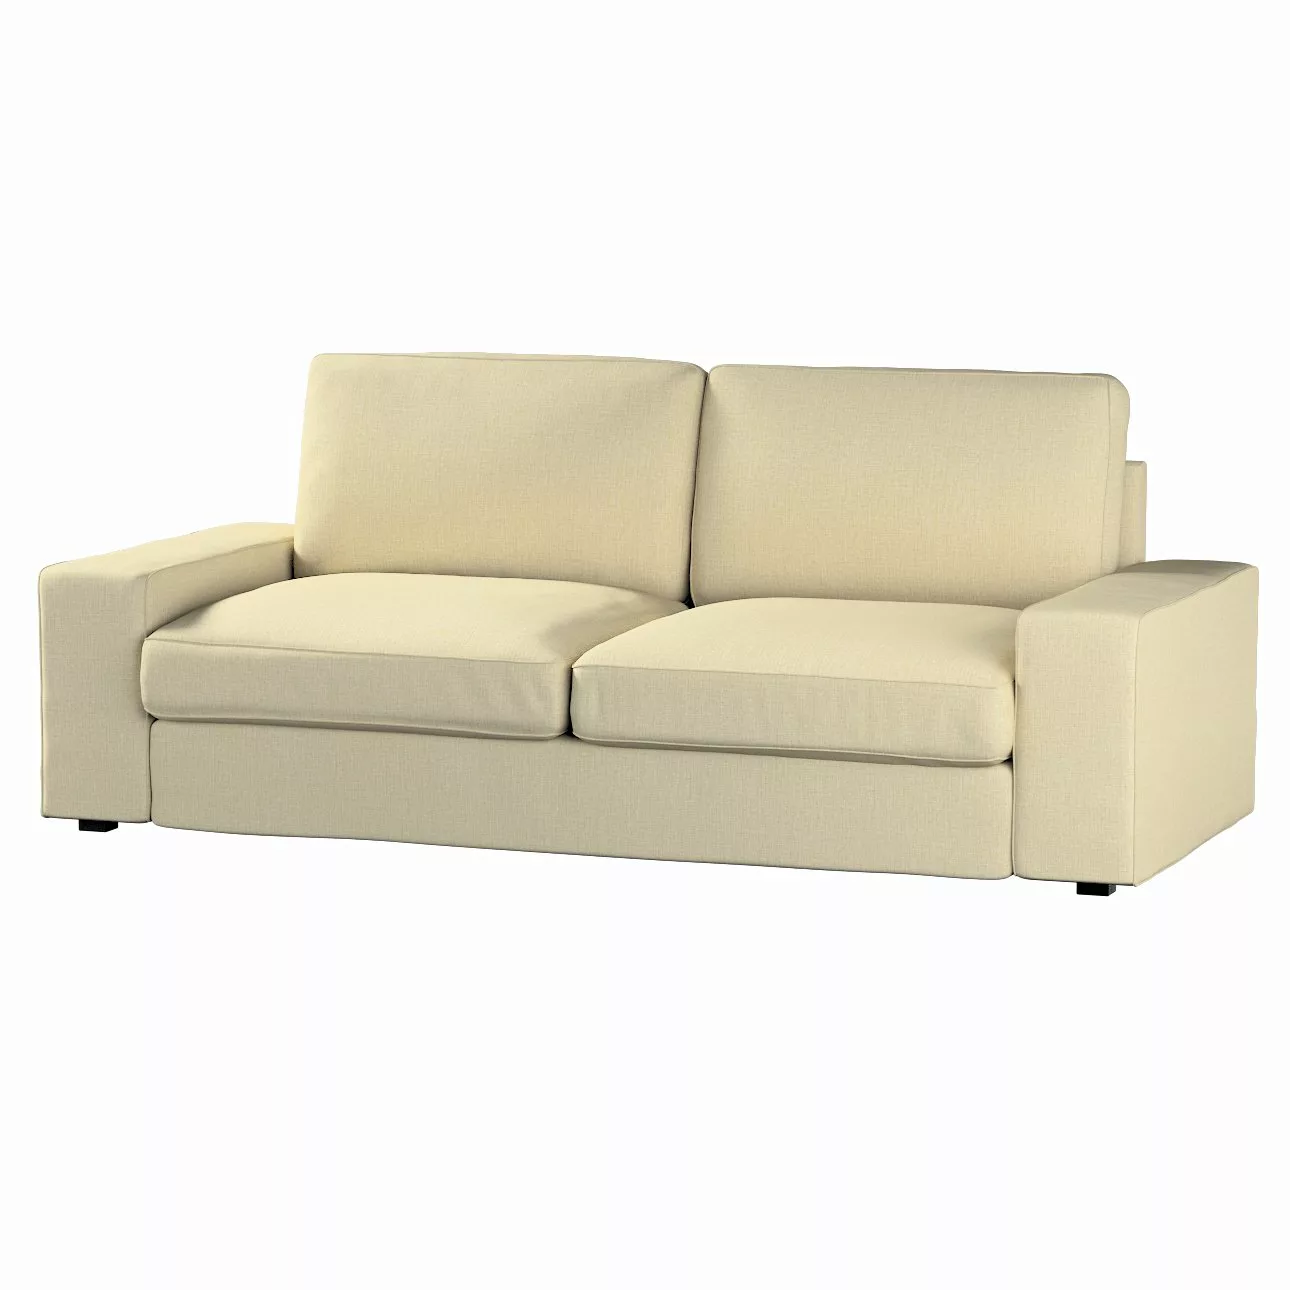 Bezug für Kivik 3-Sitzer Sofa, olivgrün-creme, Bezug für Sofa Kivik 3-Sitze günstig online kaufen